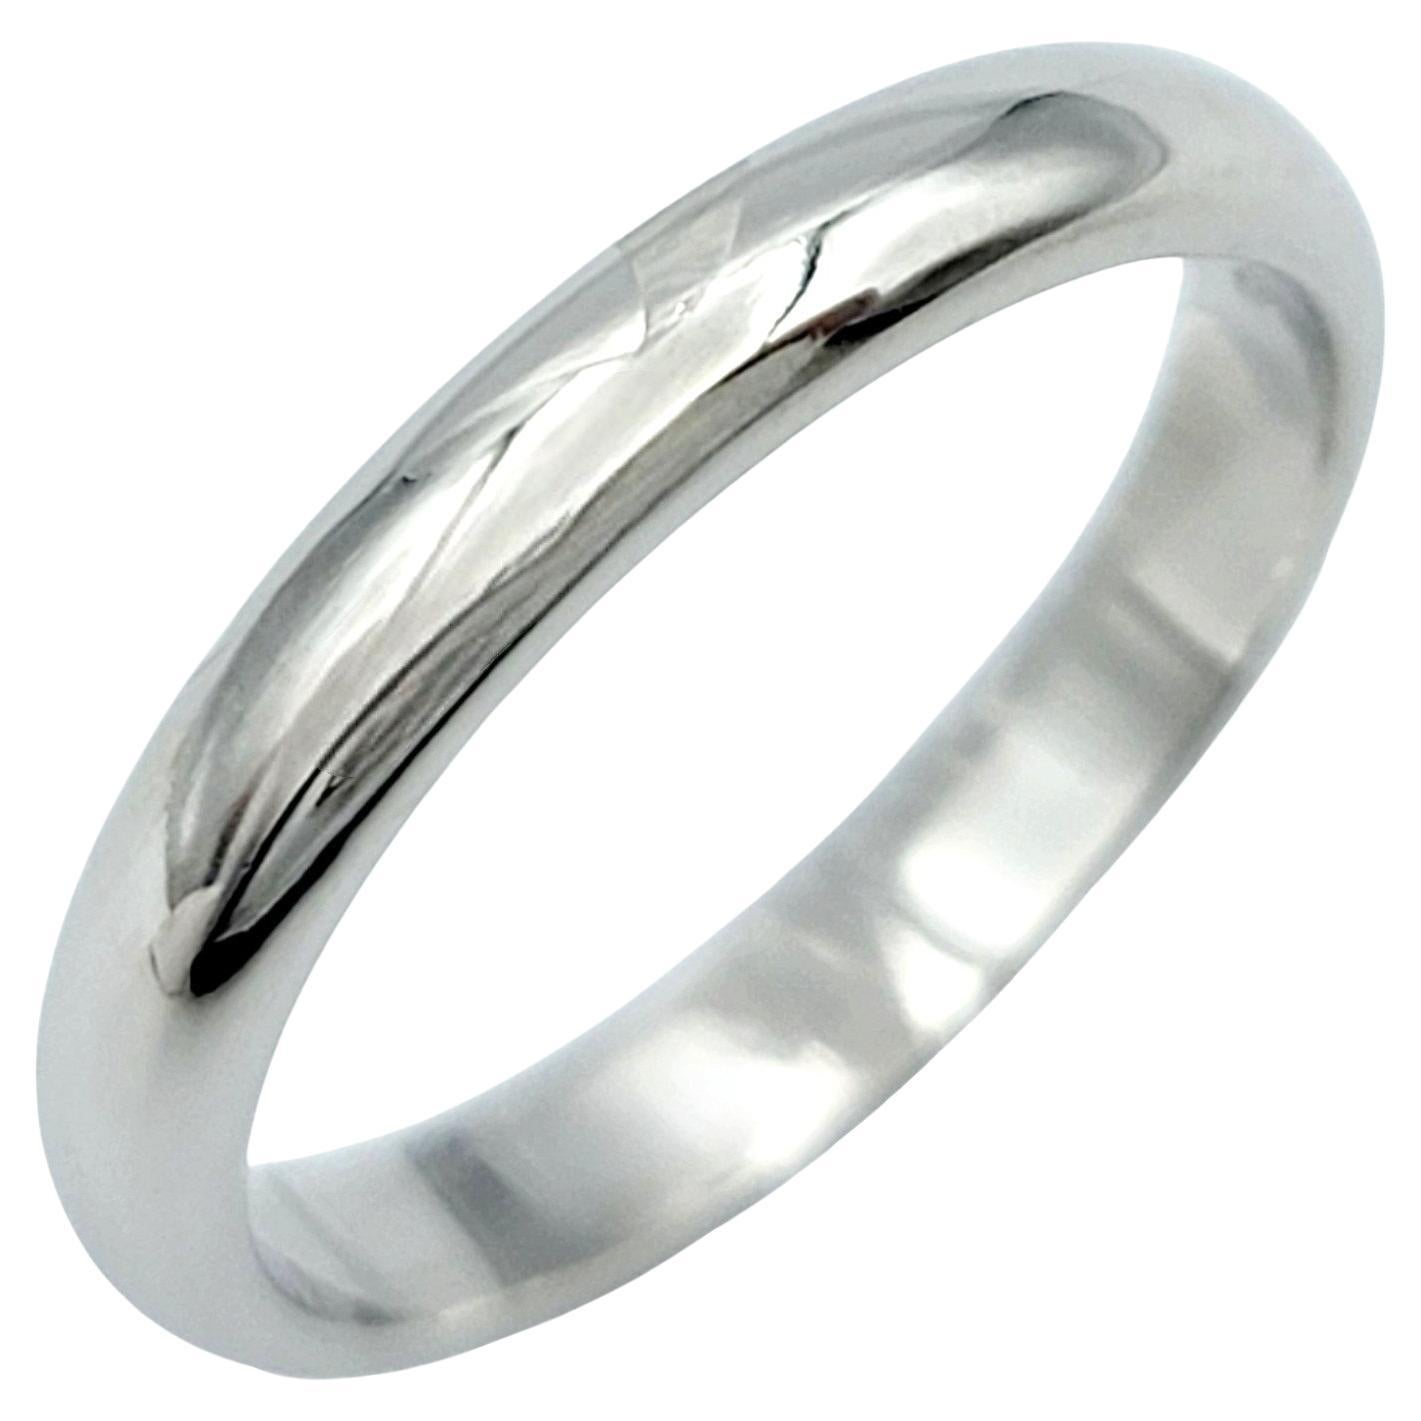 Tiffany & Co. Tiffany Forever Wedding Band Ring Set in Polished Platinum